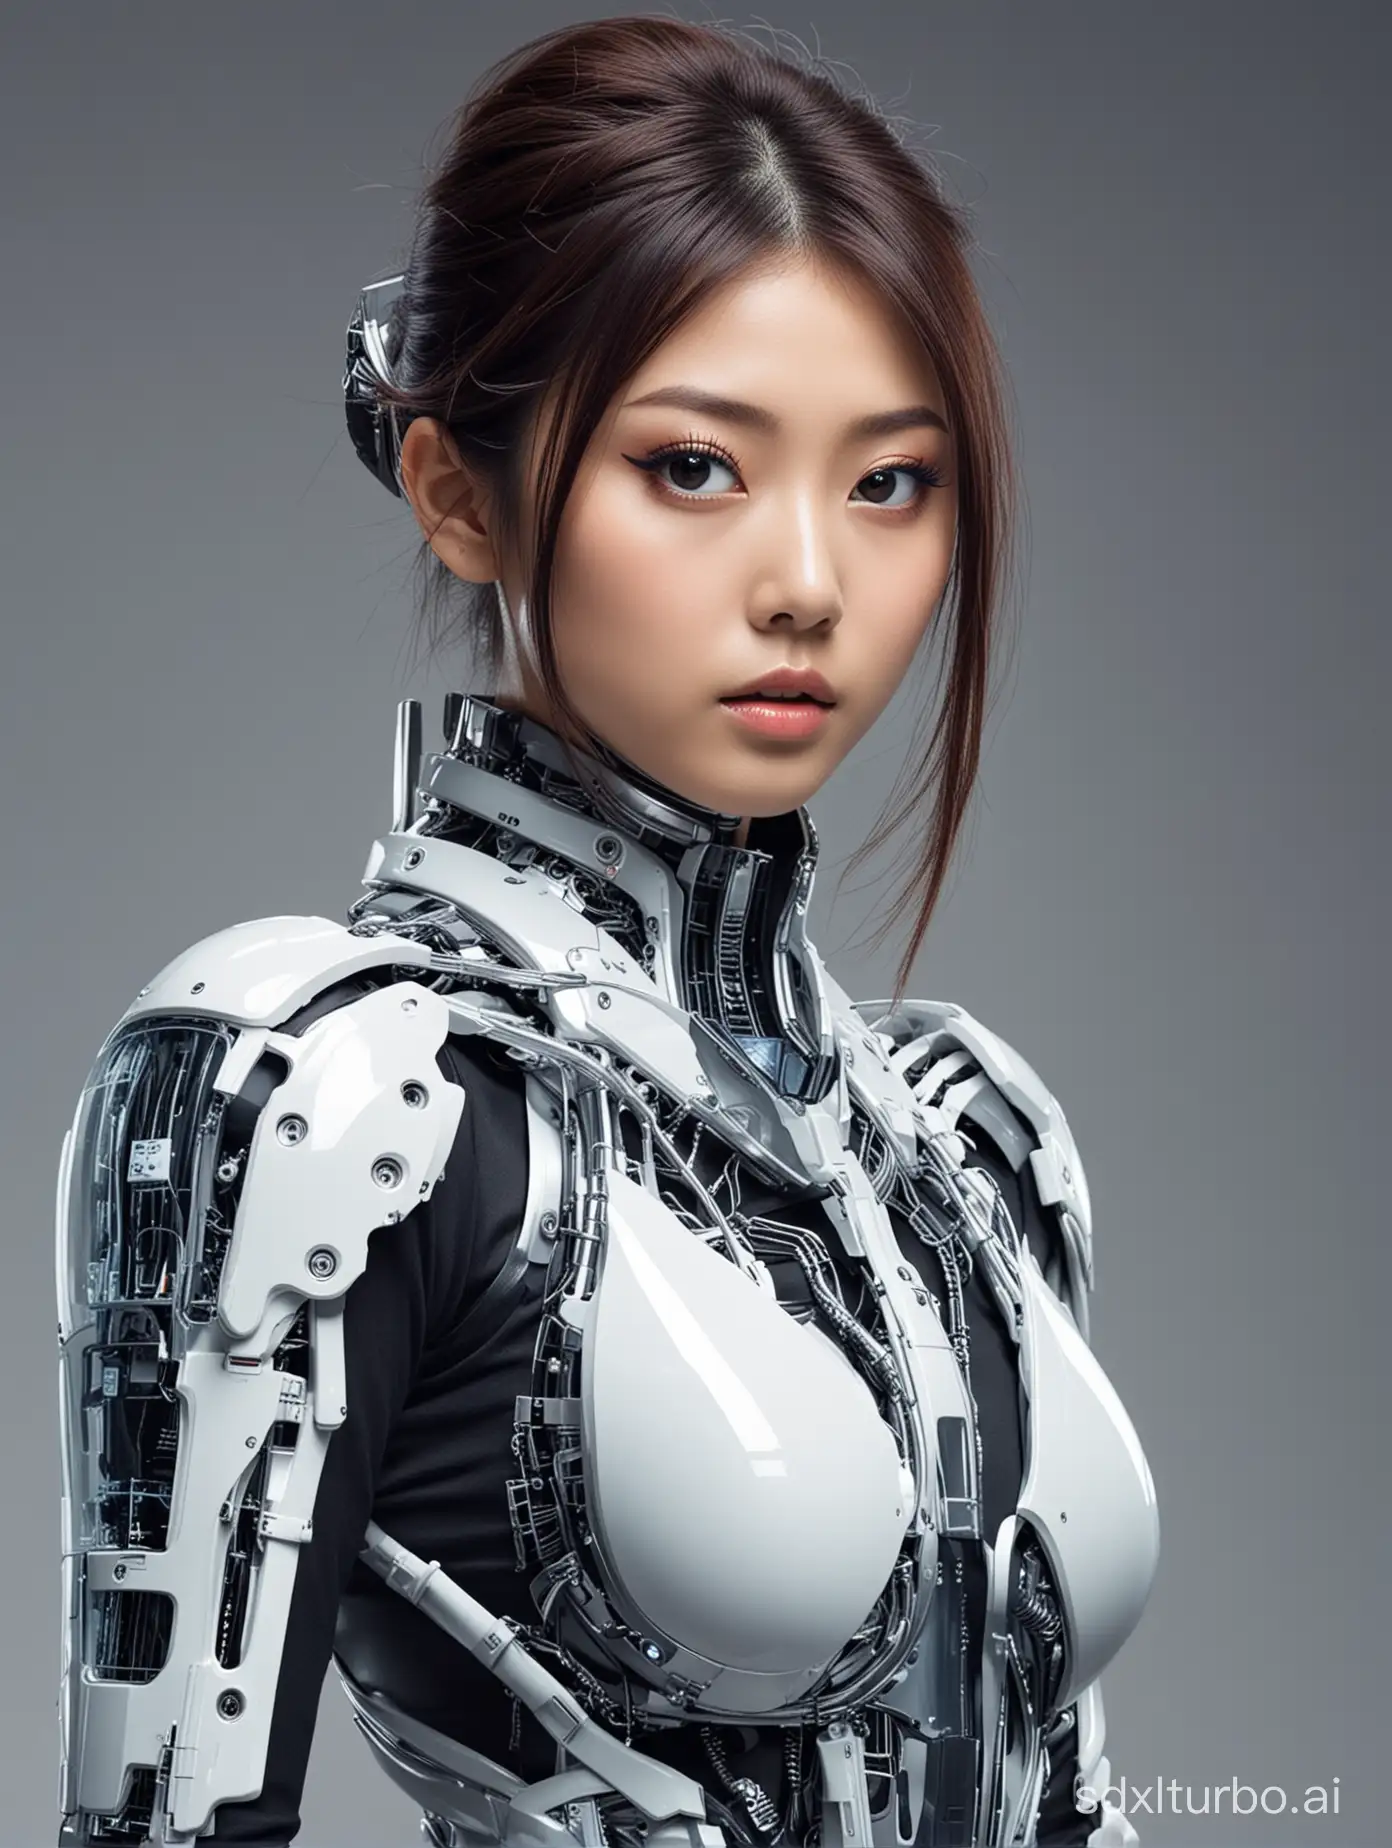 Japanese fashion futuristic model woman